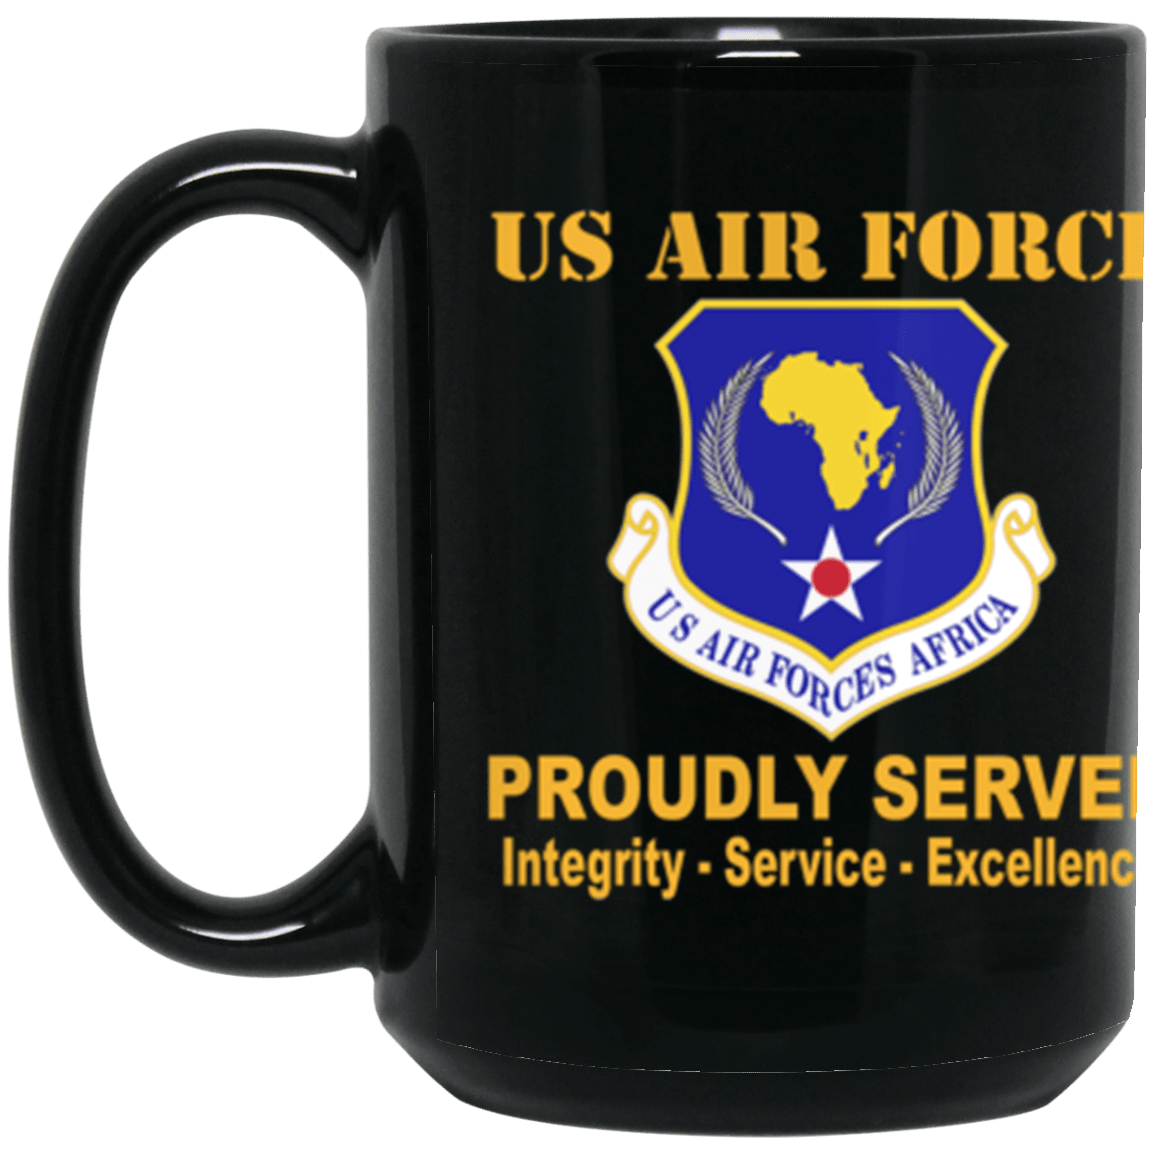 US Air Force Air Combat Command Proudly Served Core Values 15 oz. Black Mug-Mug-USAF-Veterans Nation